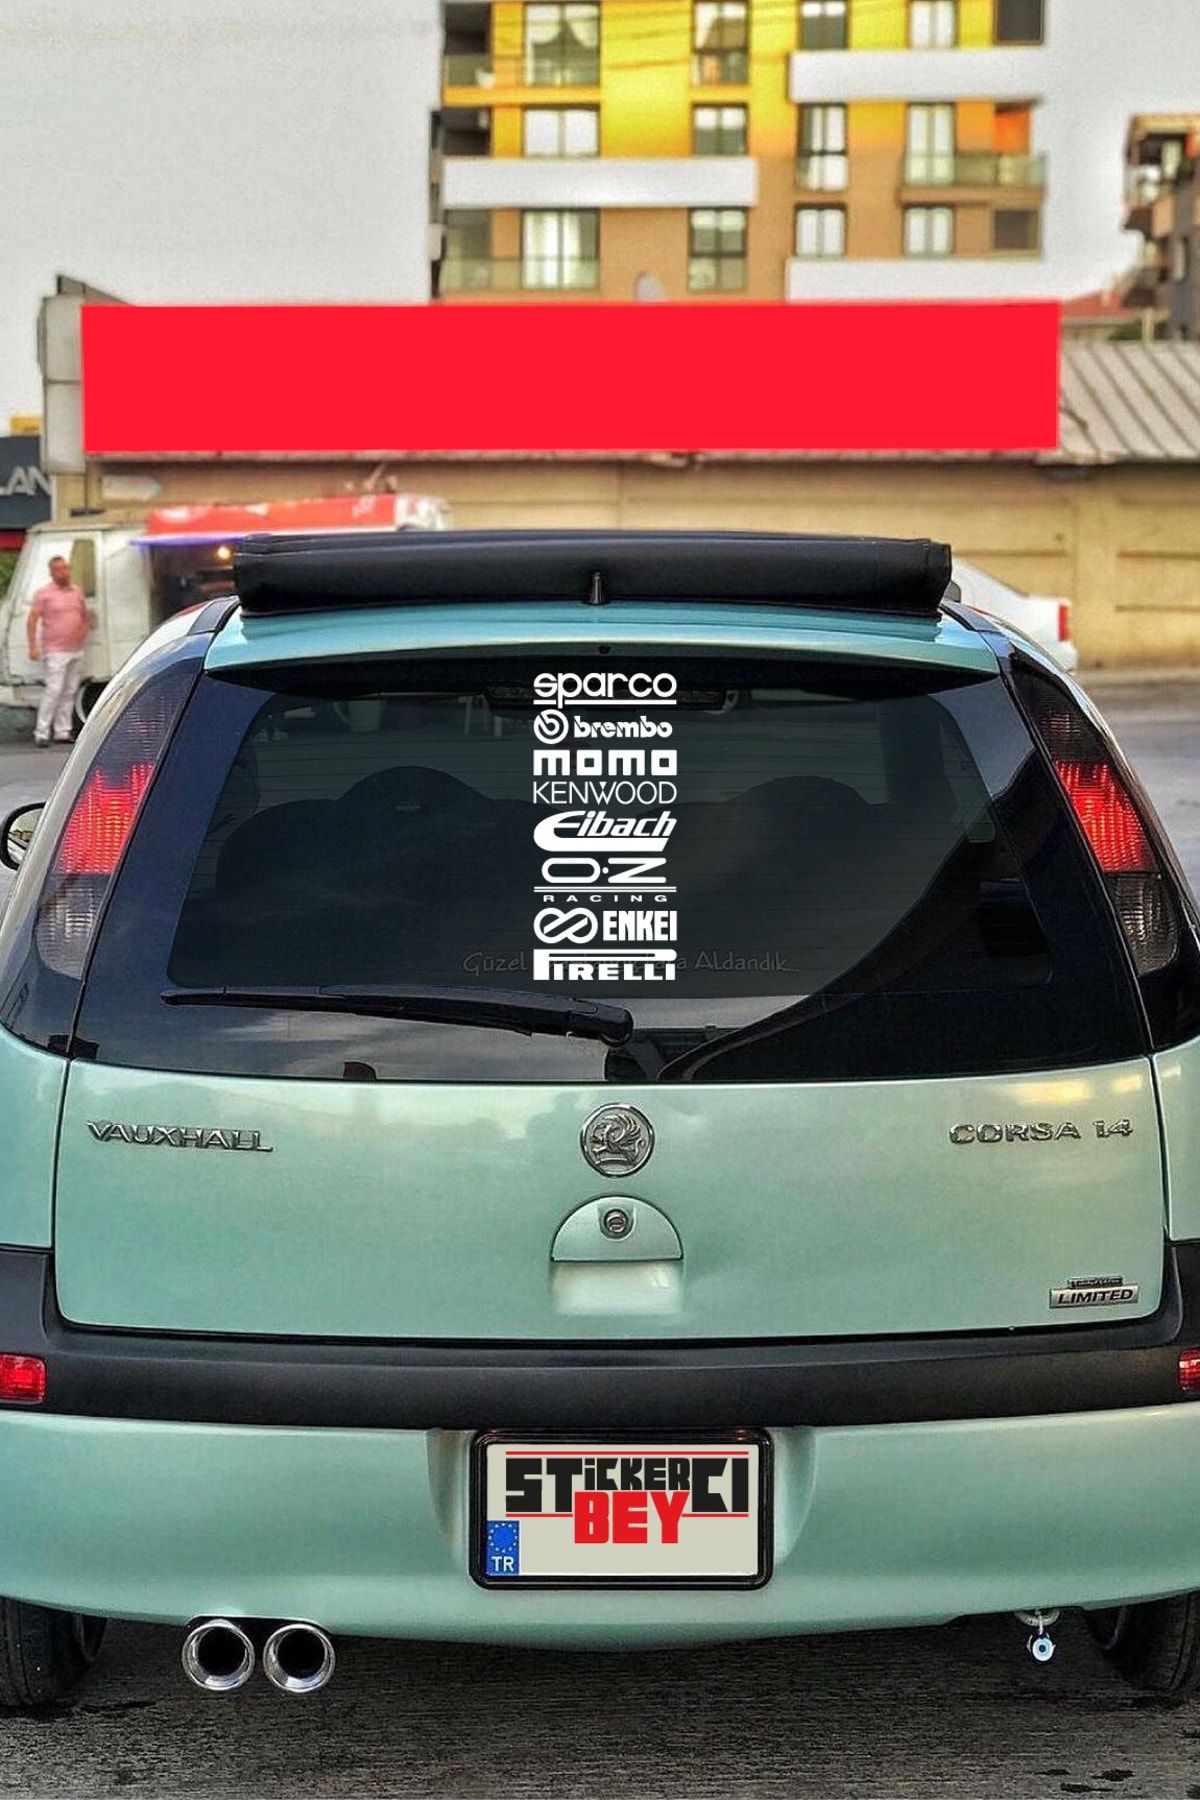 STİCKERCI BEY Sparco Brembo Momo Beyaz Markalar 38*18 Cm Araba Arka Cam Sticker Seti Araç Arka Cam Etiket